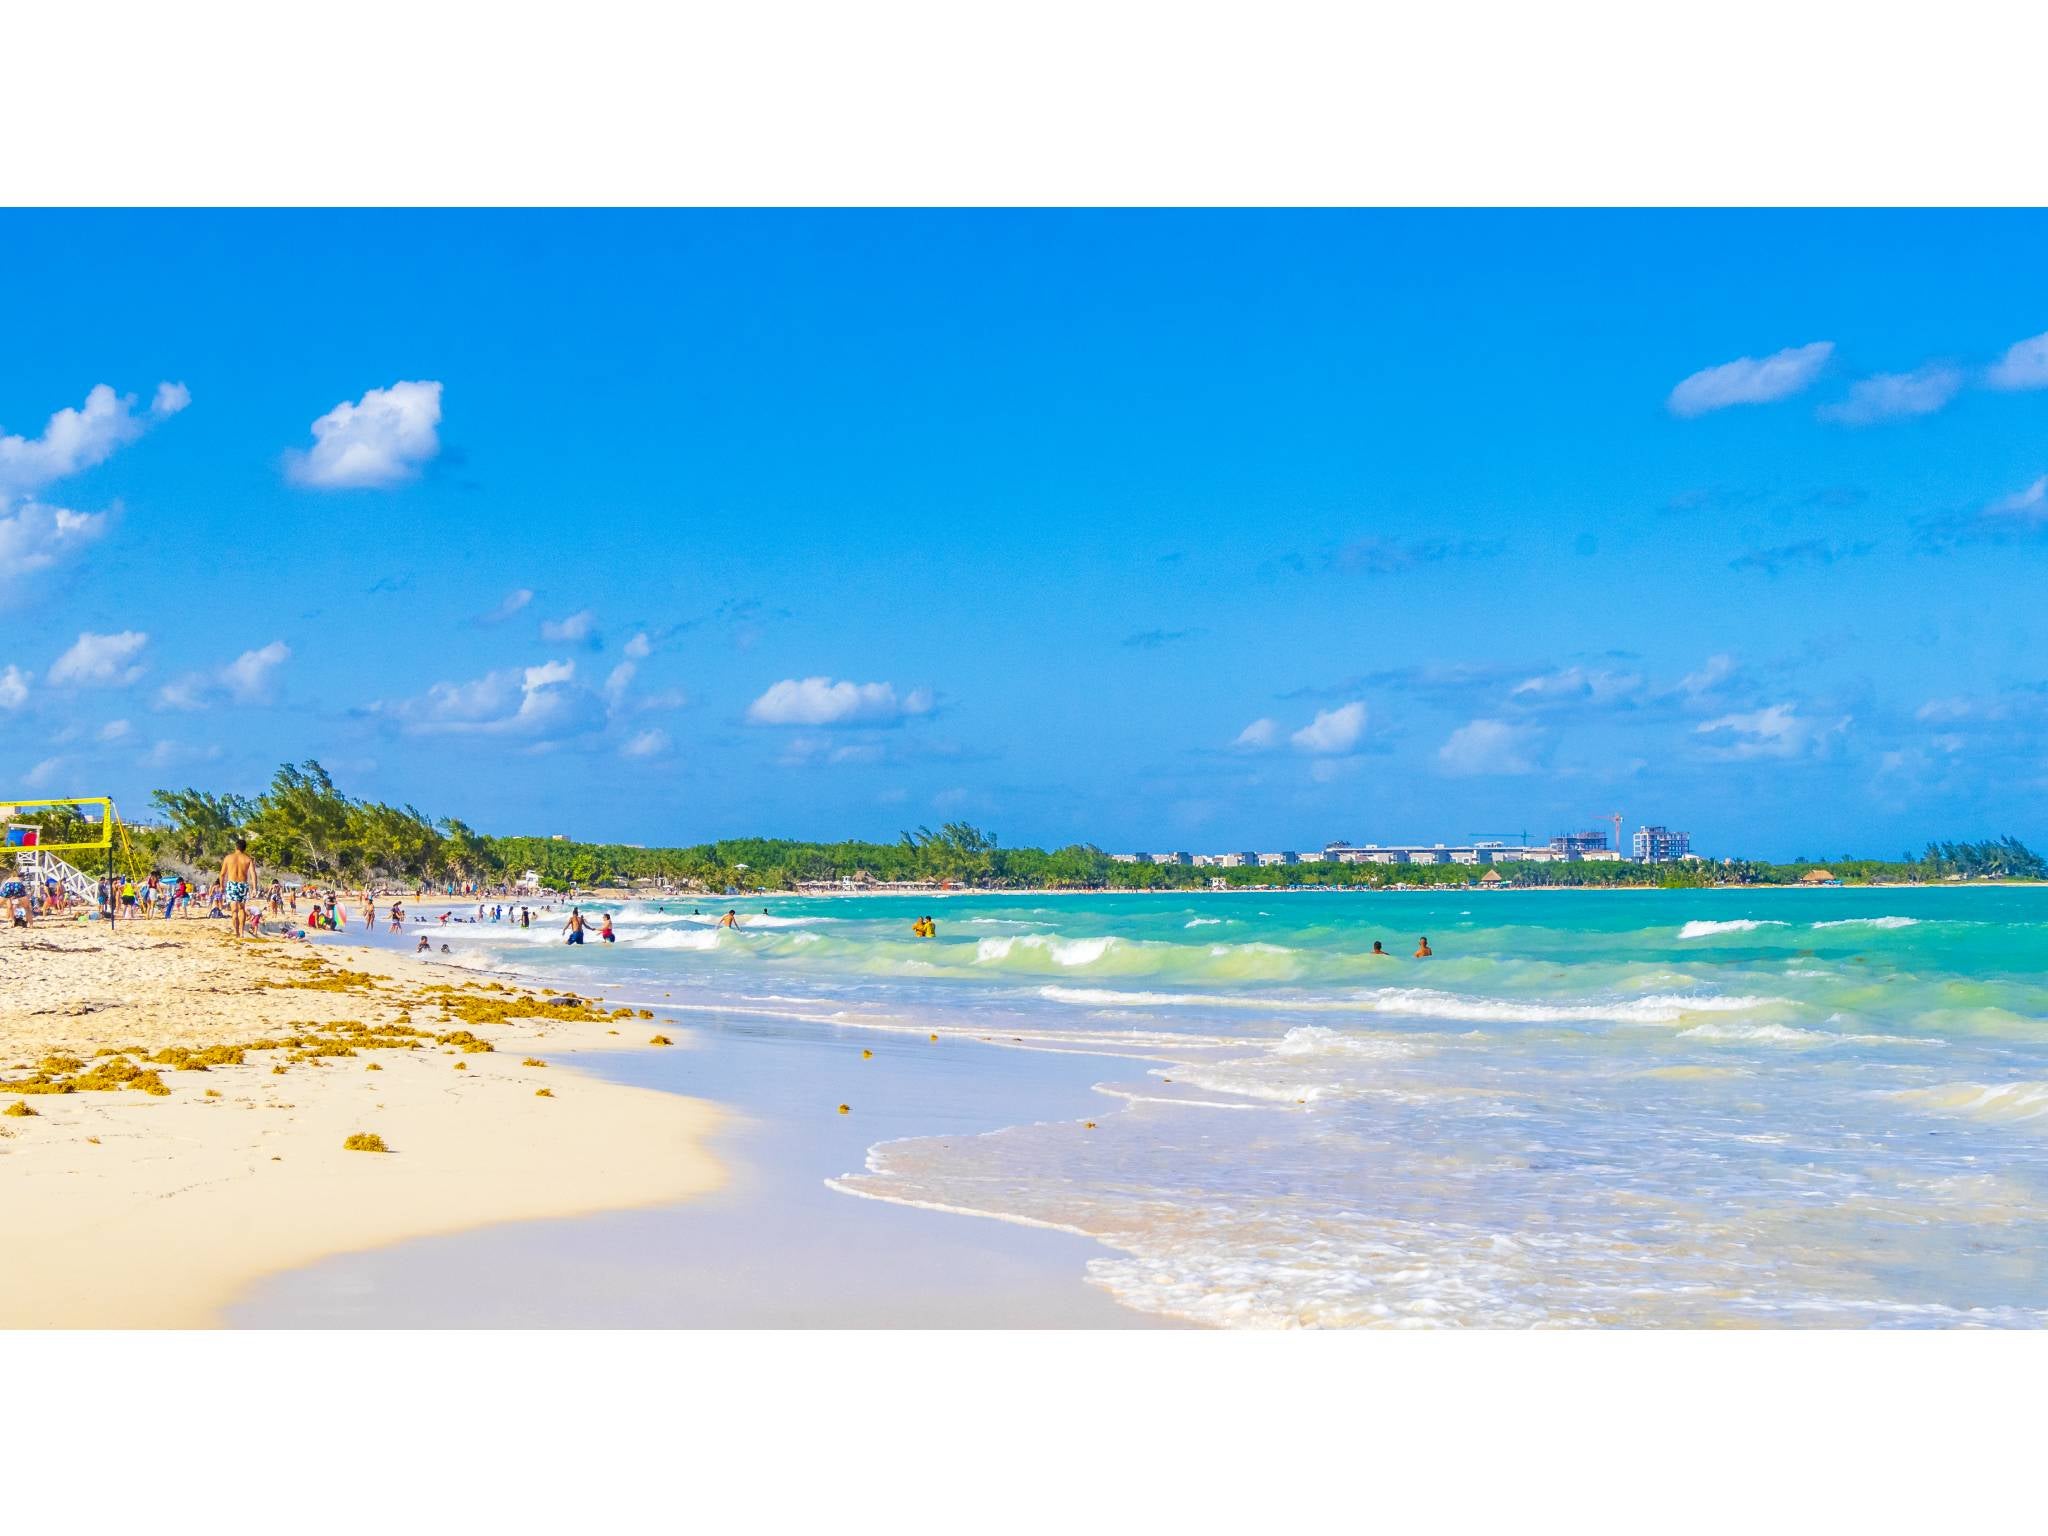 Mexico’s Yucatan Peninsula has a stunning sandy coastline